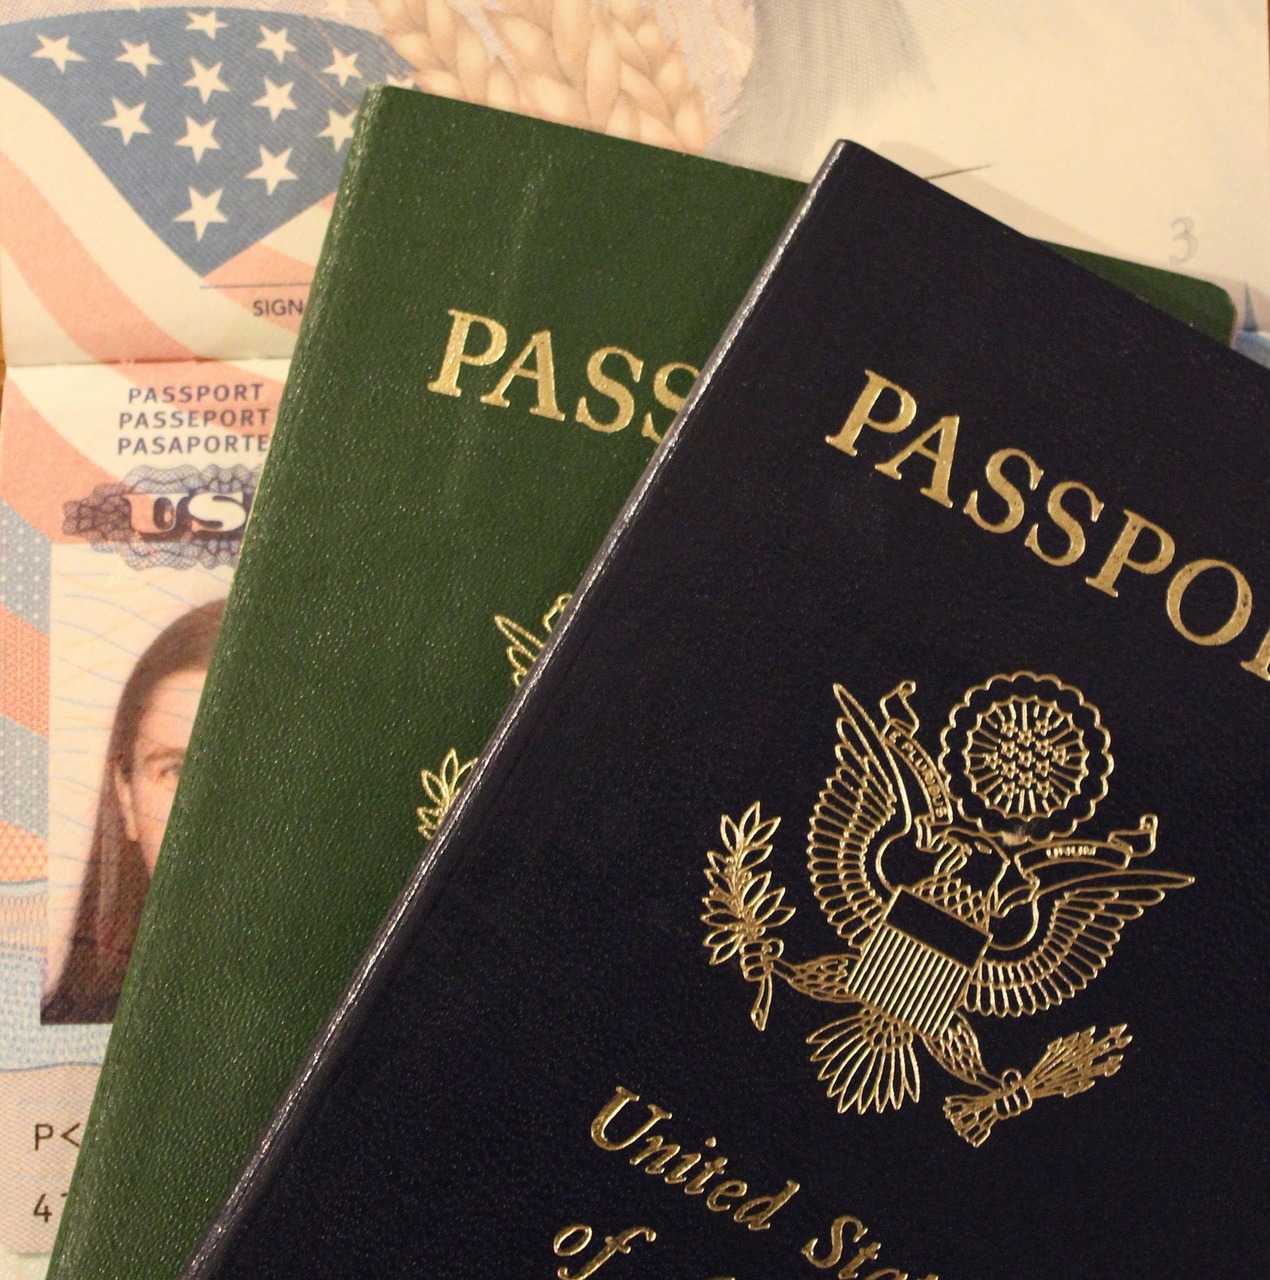 passport, united states, documentation